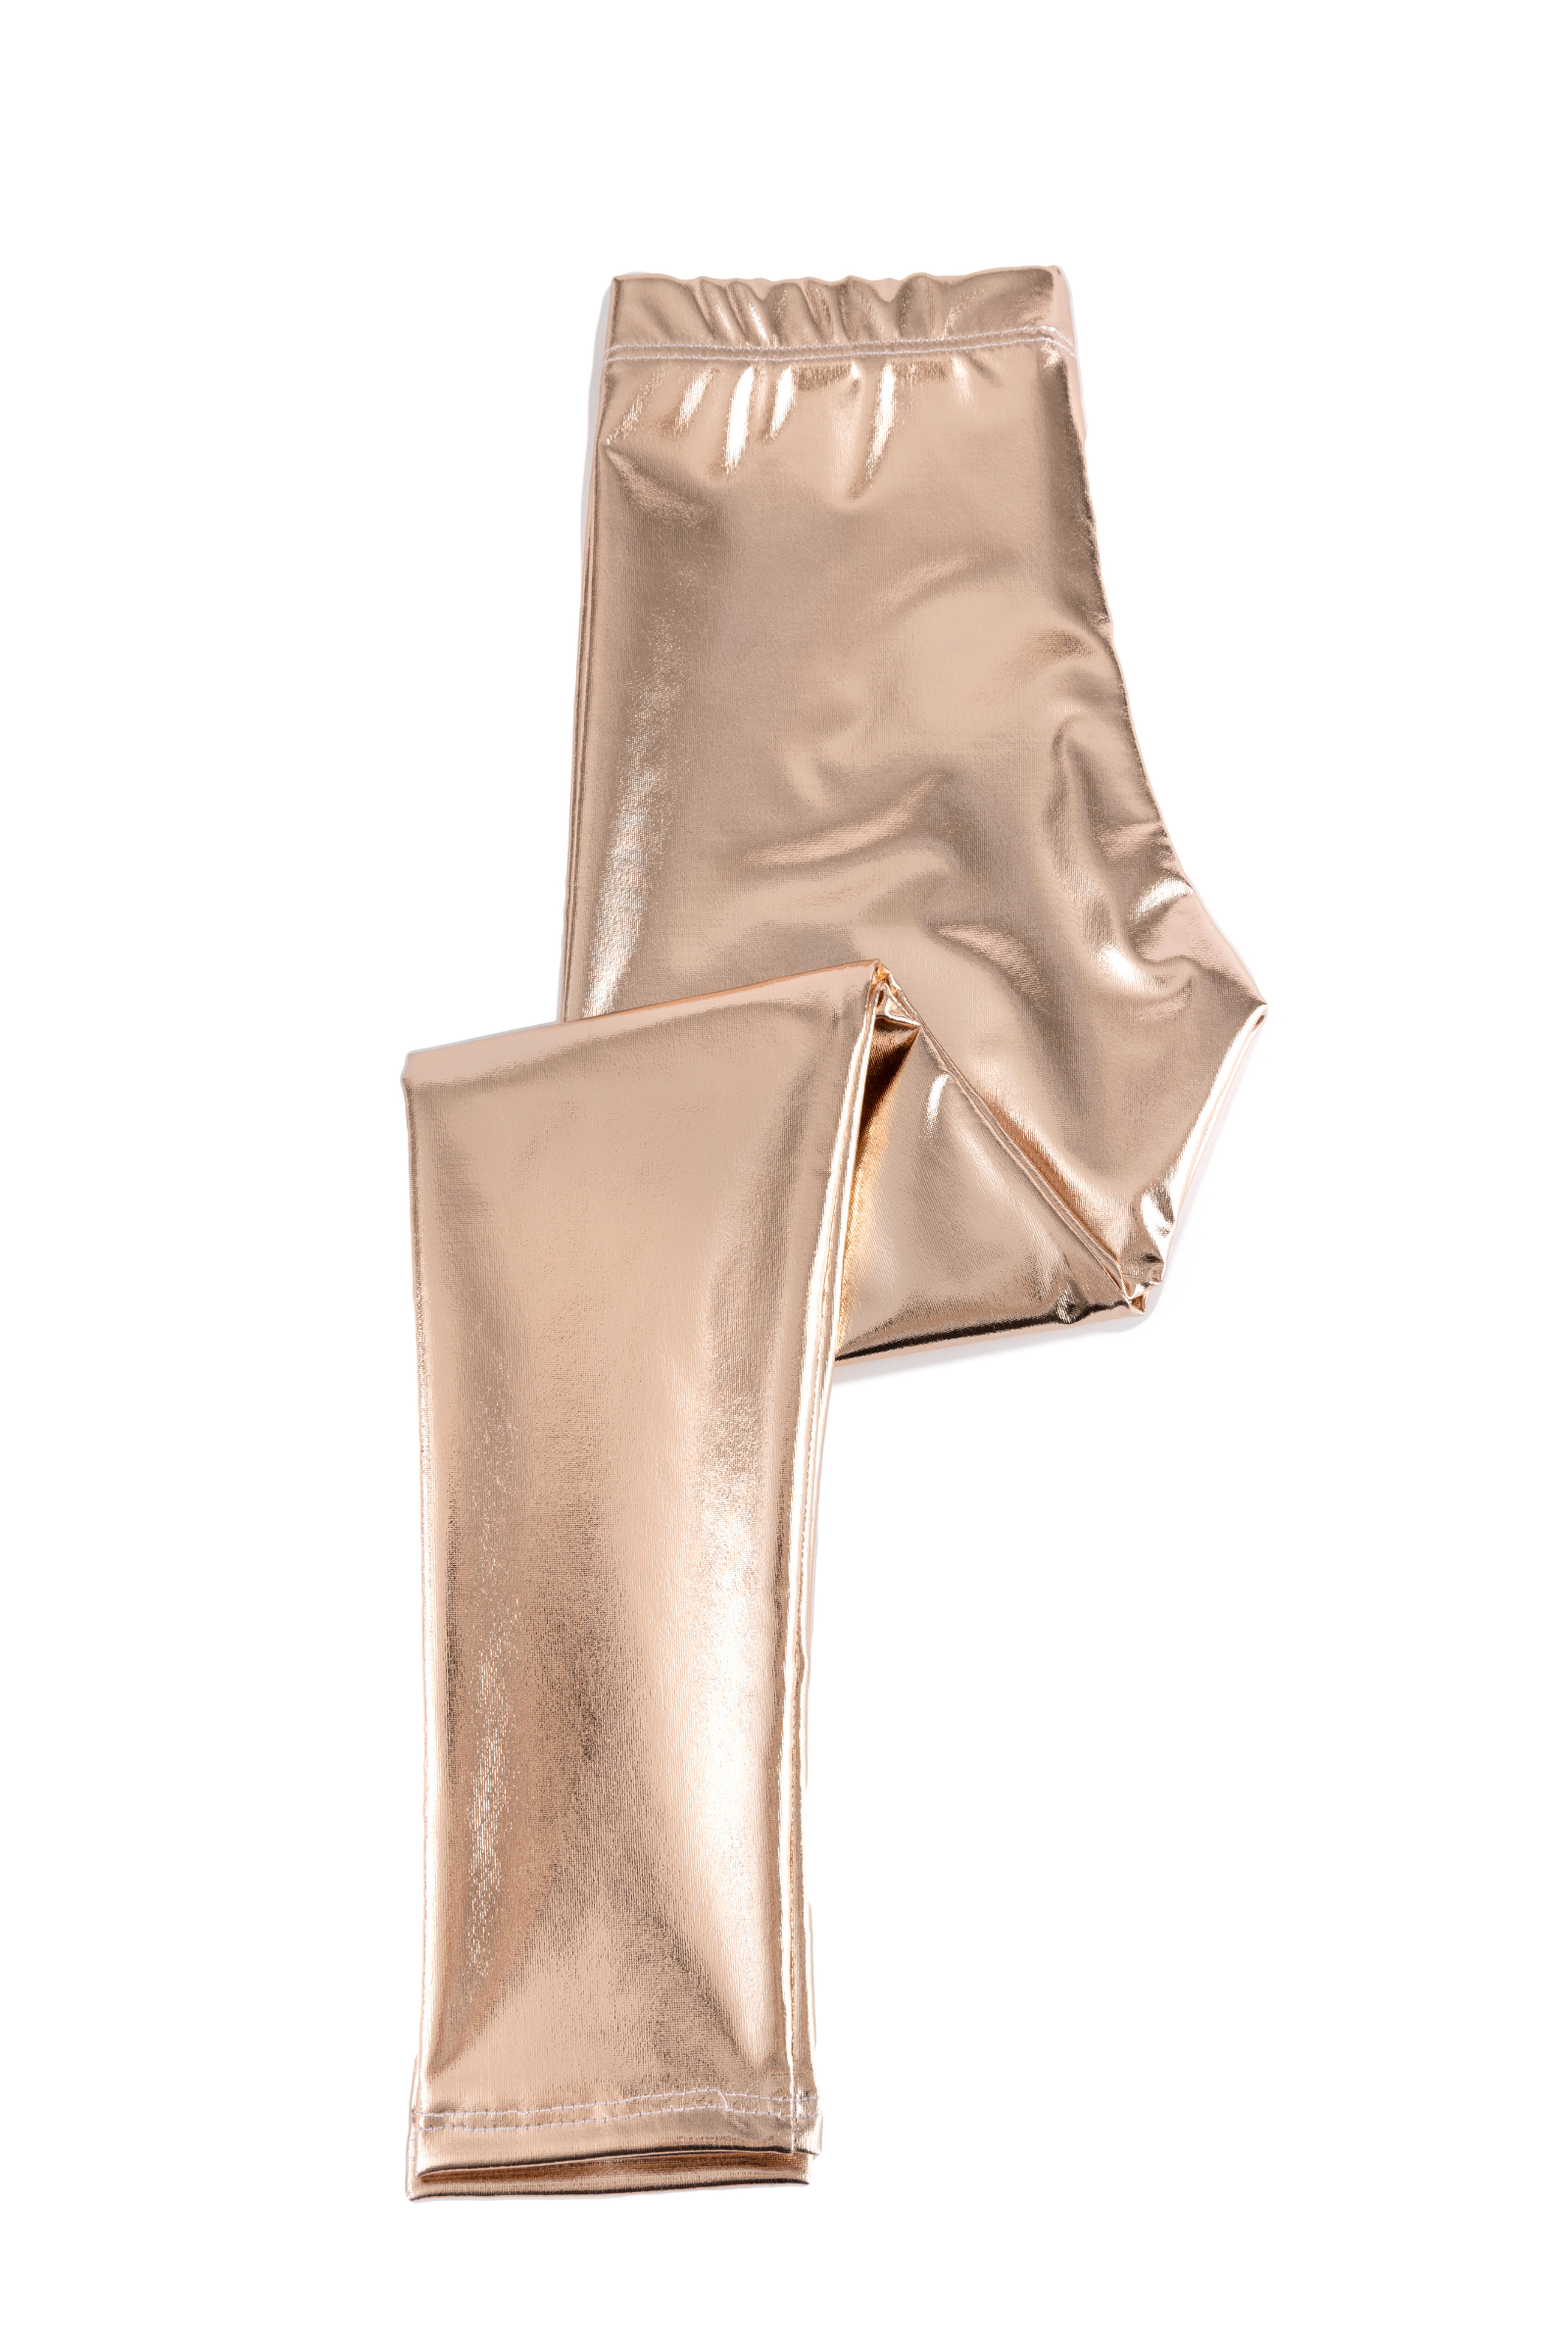 BEST DEAL Viscose Golden Solid Relaxed Leggings For Girls & Women's  (Shimmer) : : Fashion